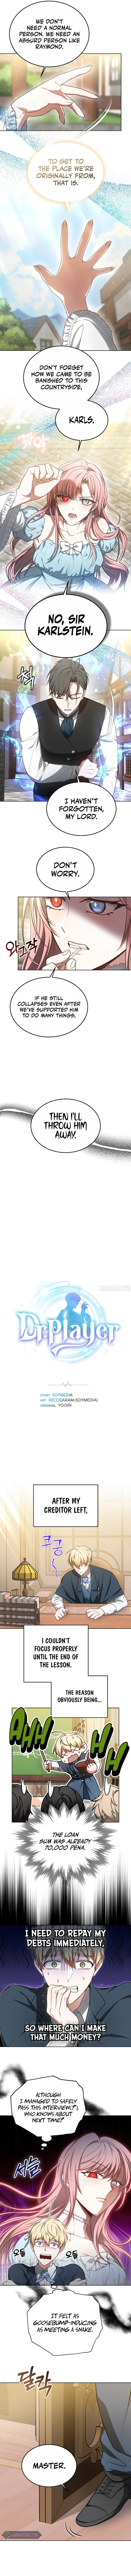 dr-player-chap-58-5